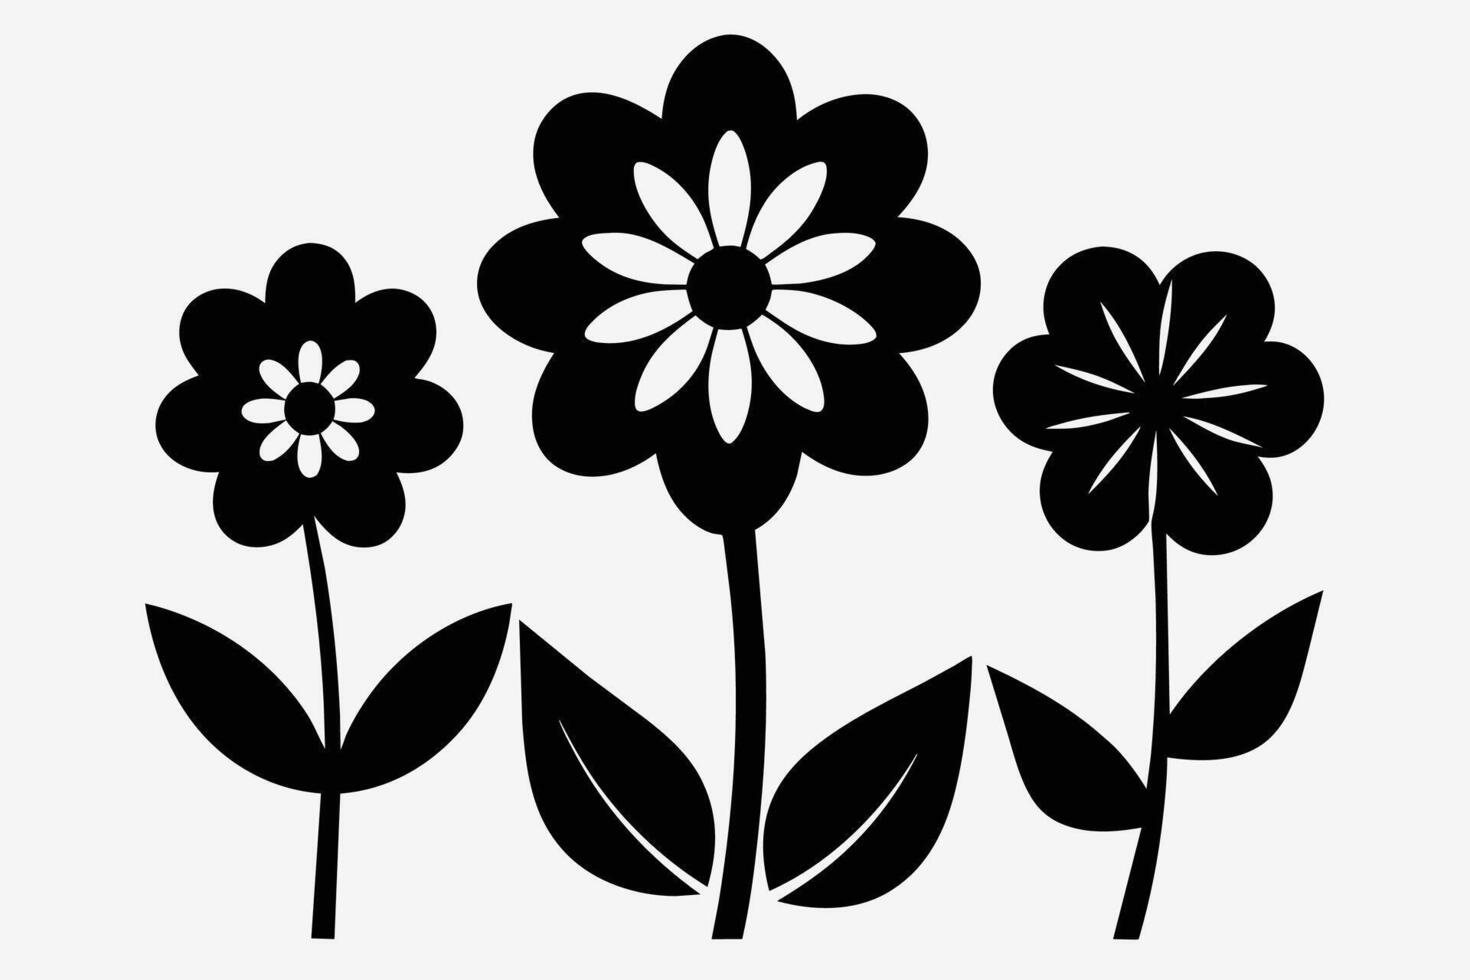 Black Cutout Symbols Of Flowers vector